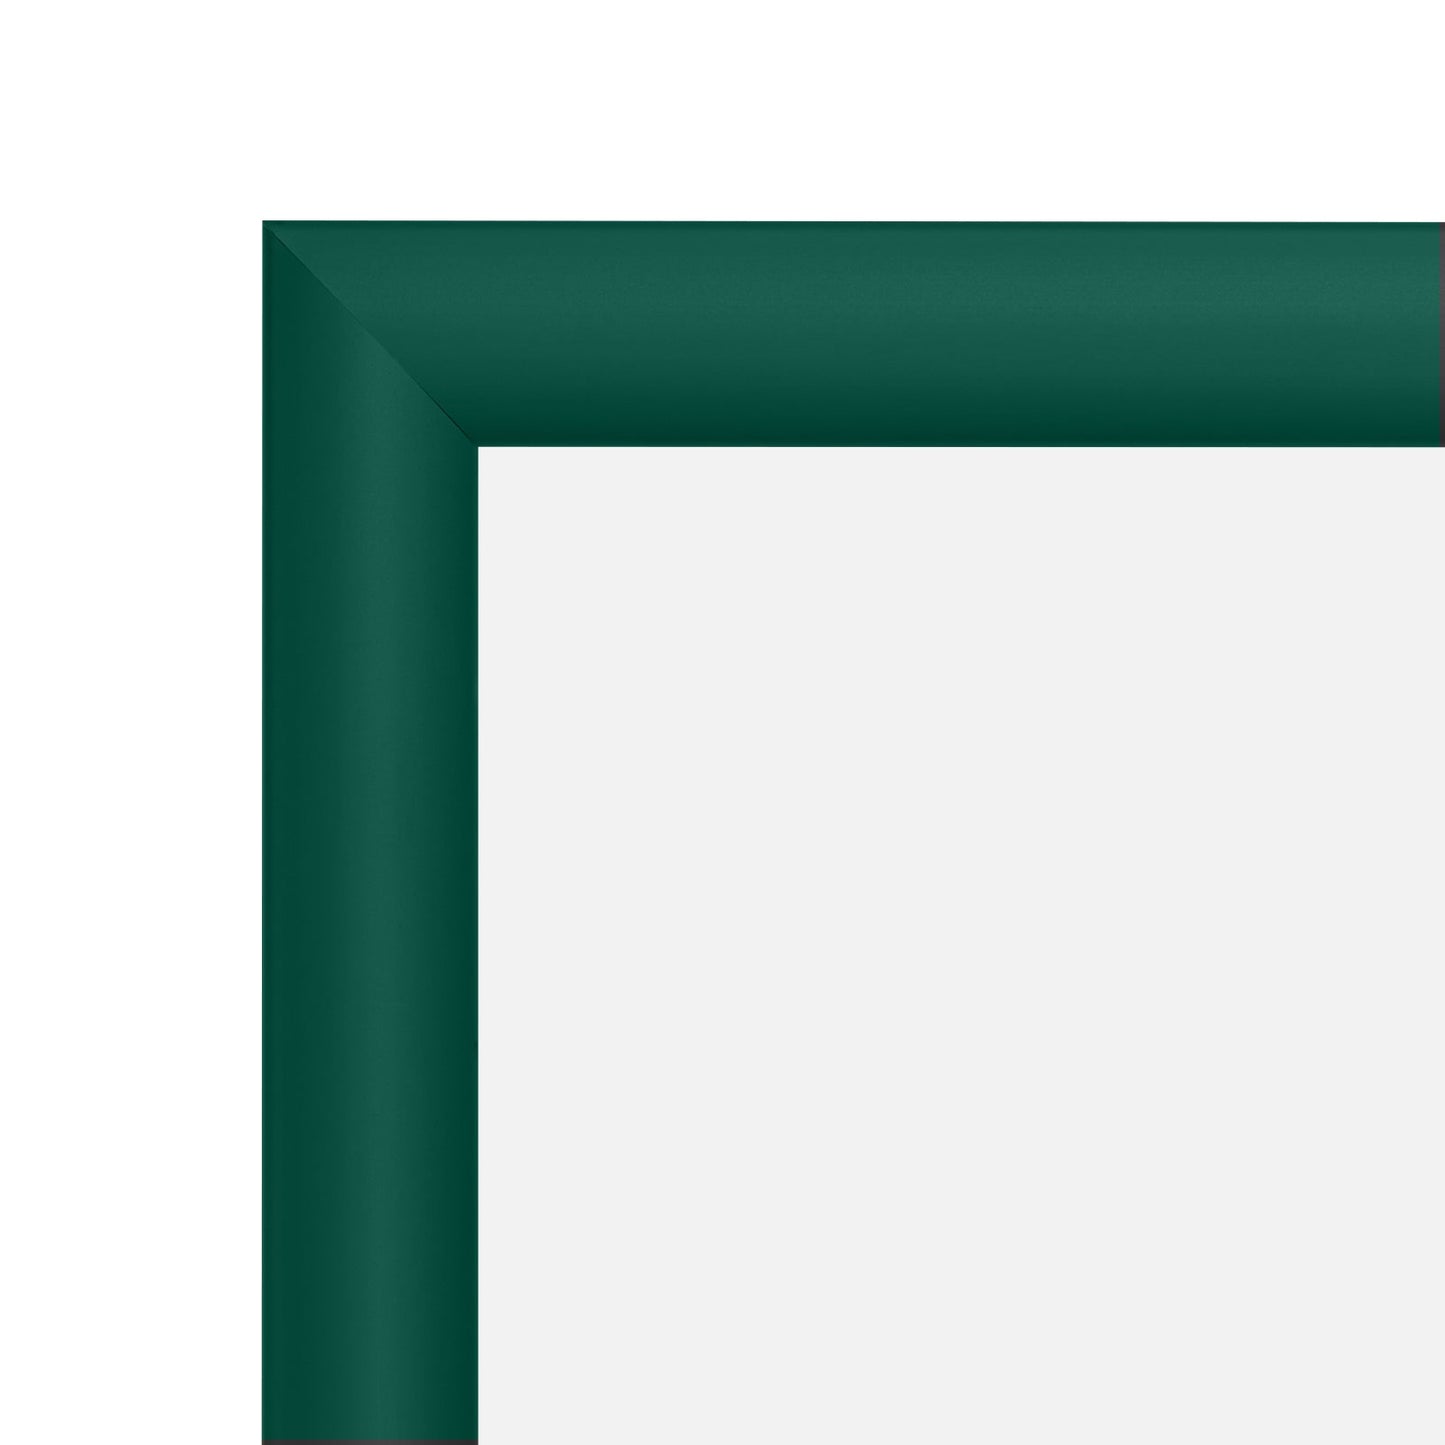 24x36 Green SnapeZo® Snap Frame - 1.2" Profile - Snap Frames Direct